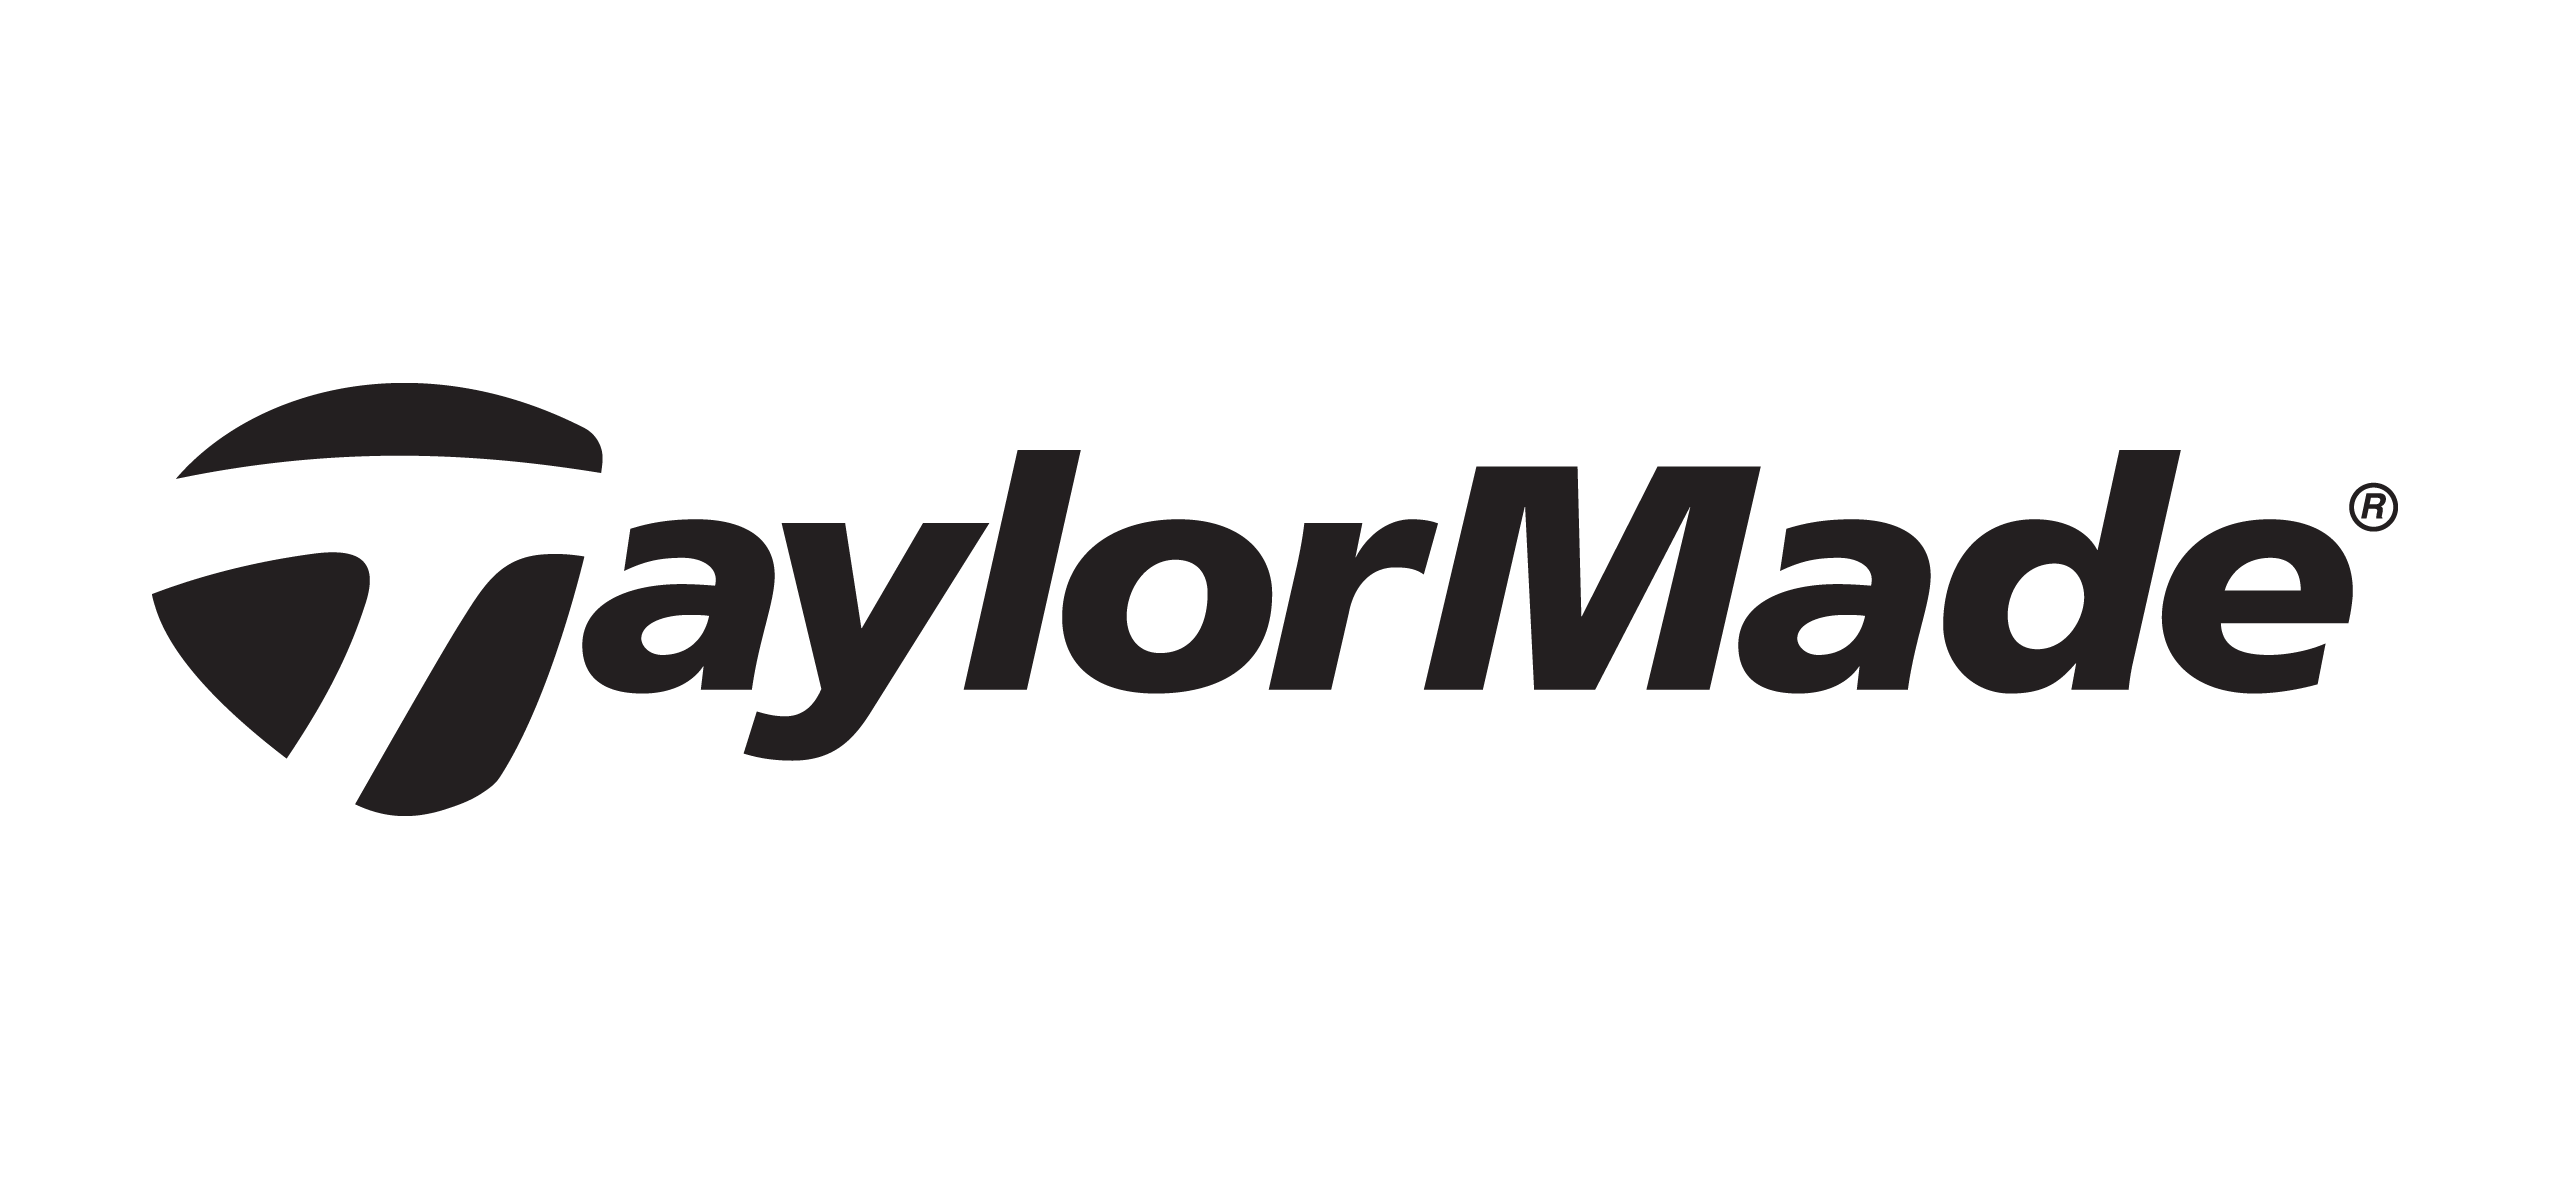 Taylormade brand logo